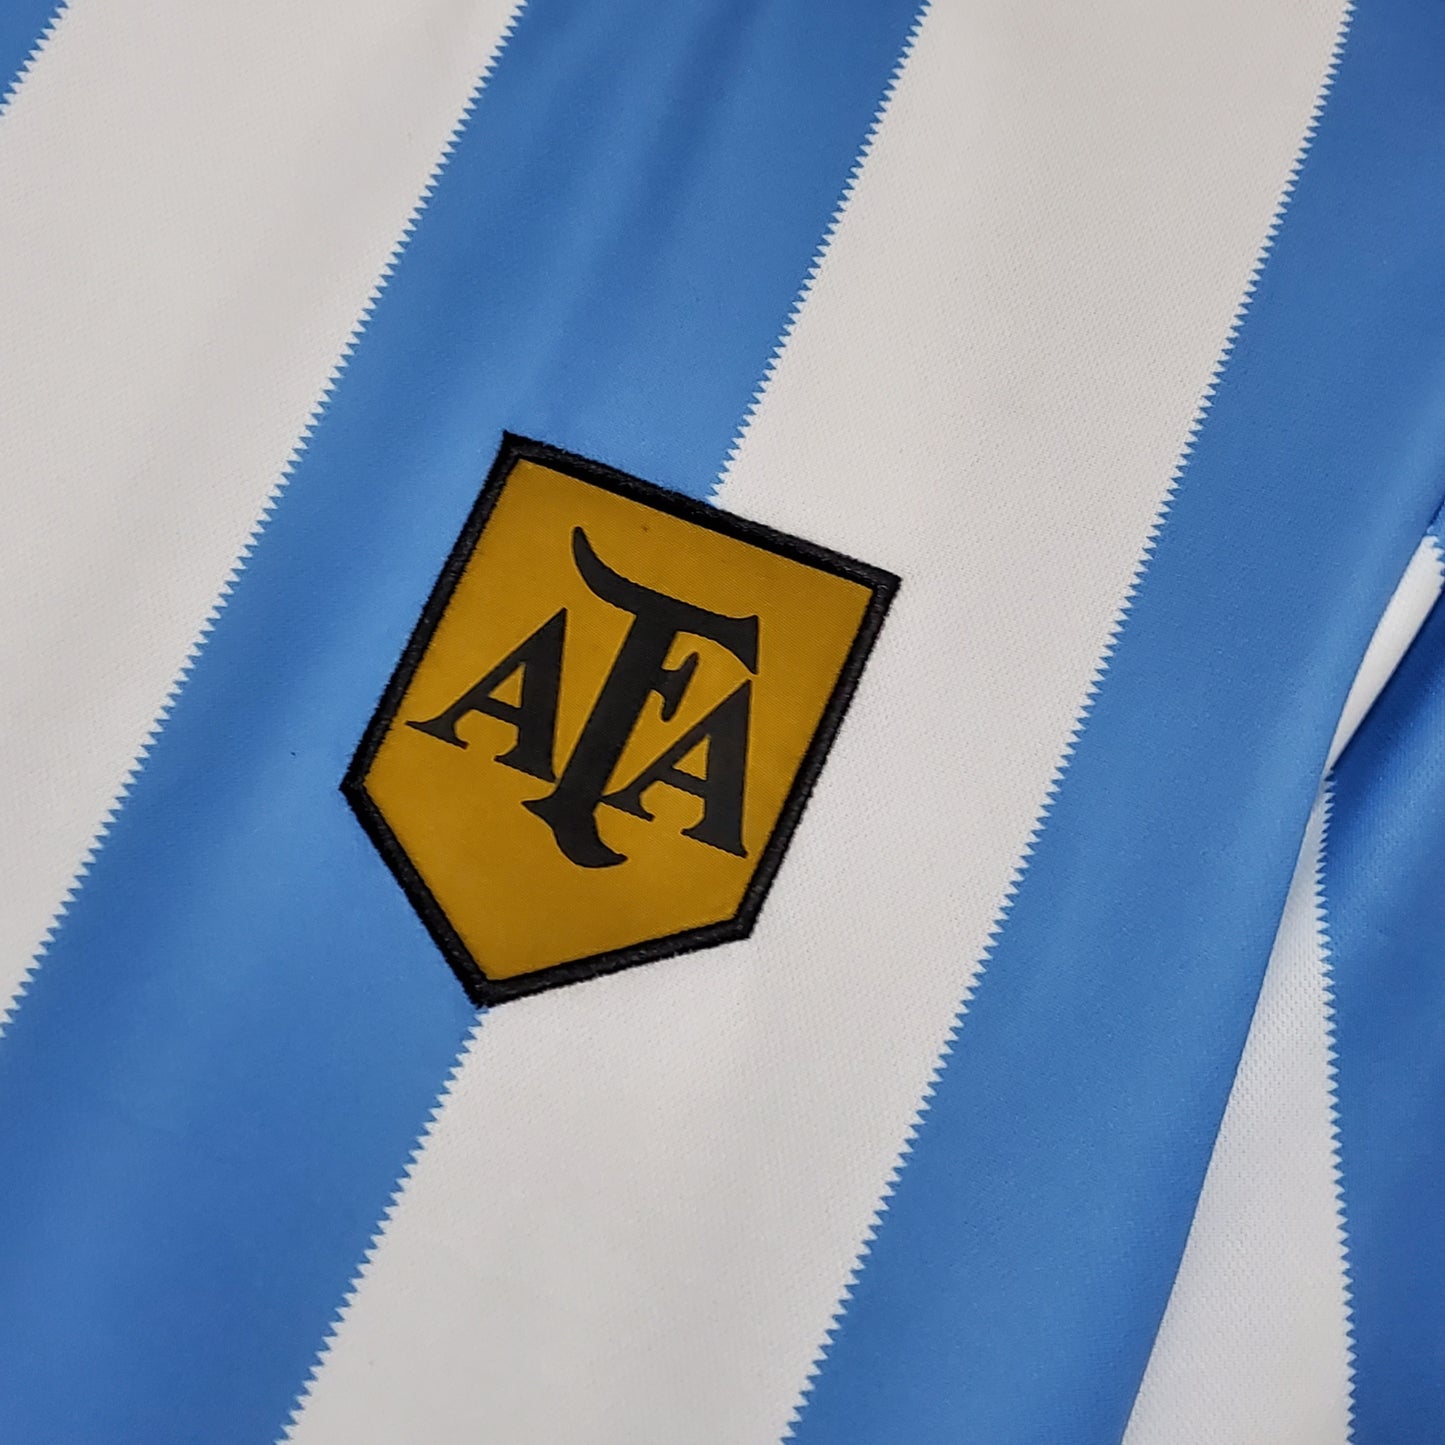 Argentina 1978 Home Shirt